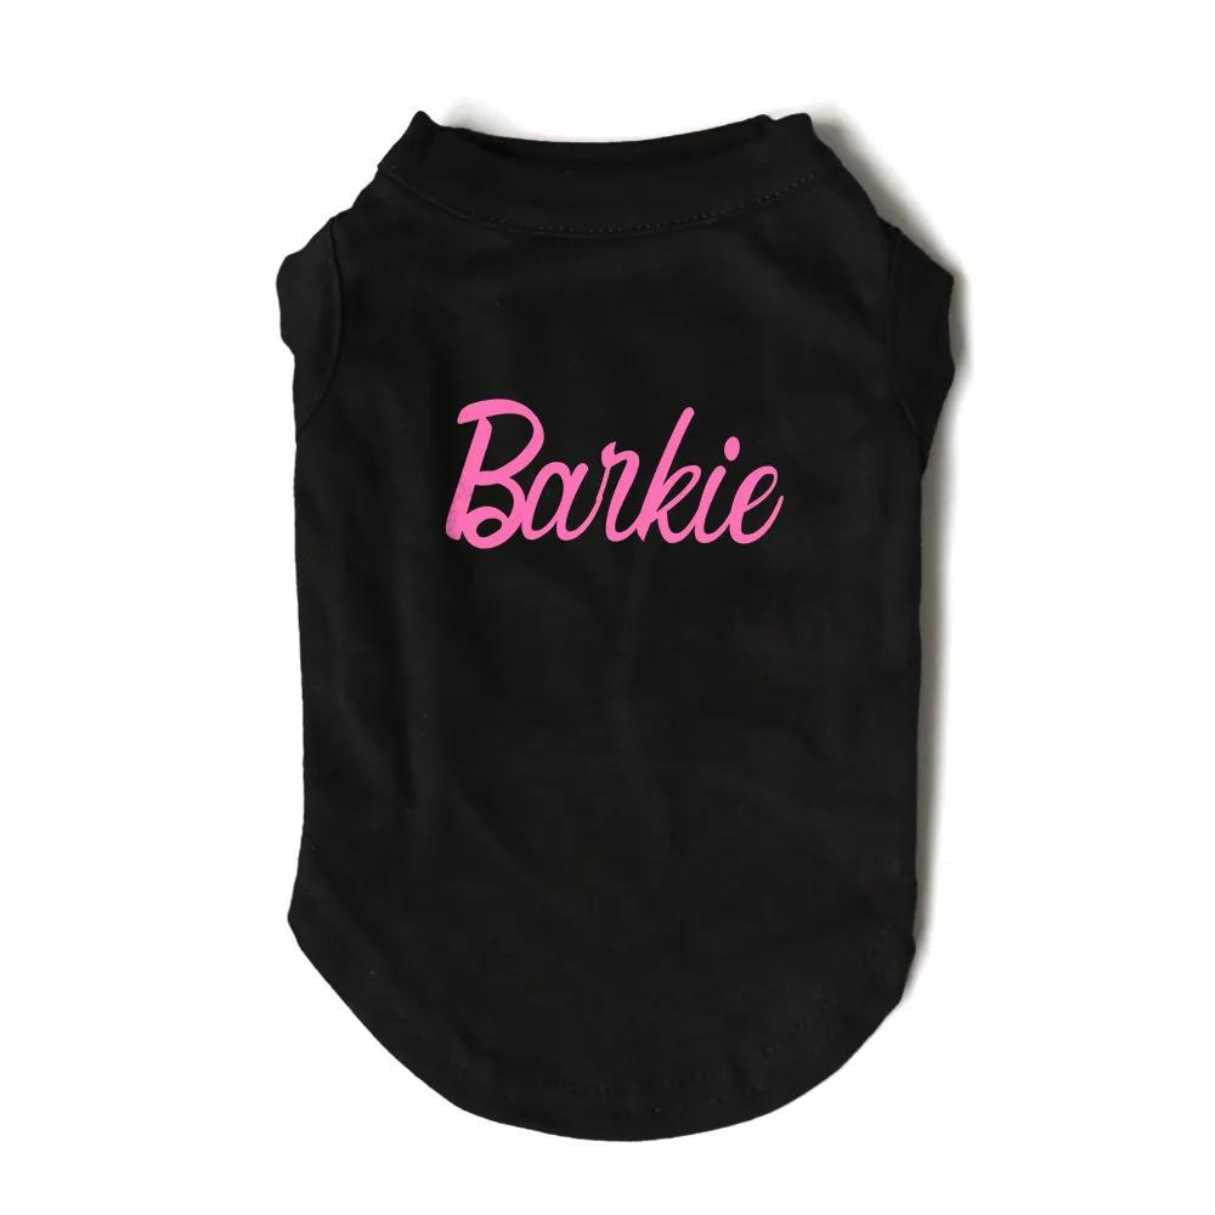 Barkie Black Tshirt, sleeveless, singlet, clothing with pink writing on the back